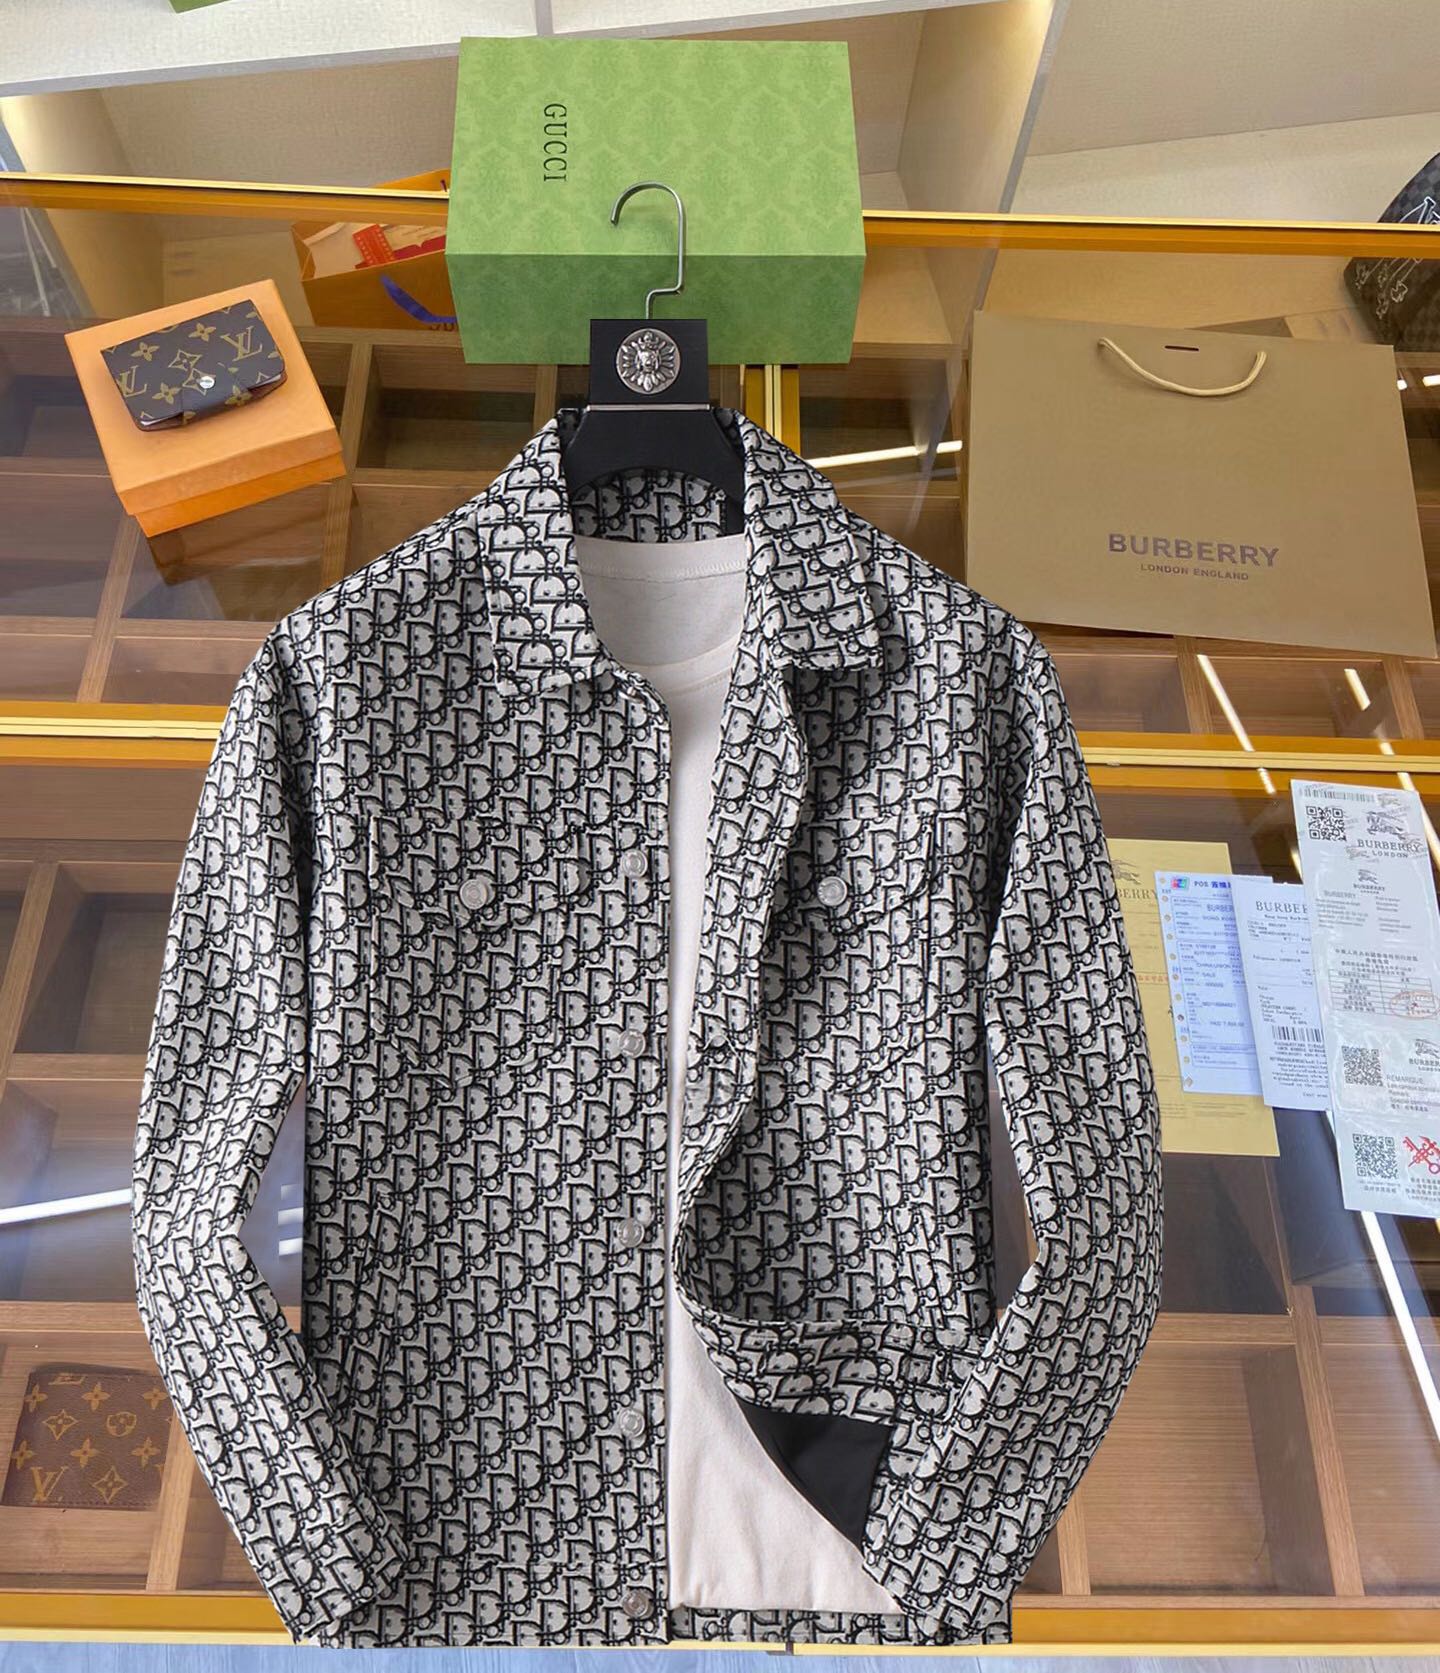 Dior Clothing Coats & Jackets Printing Fall/Winter Collection Fashion